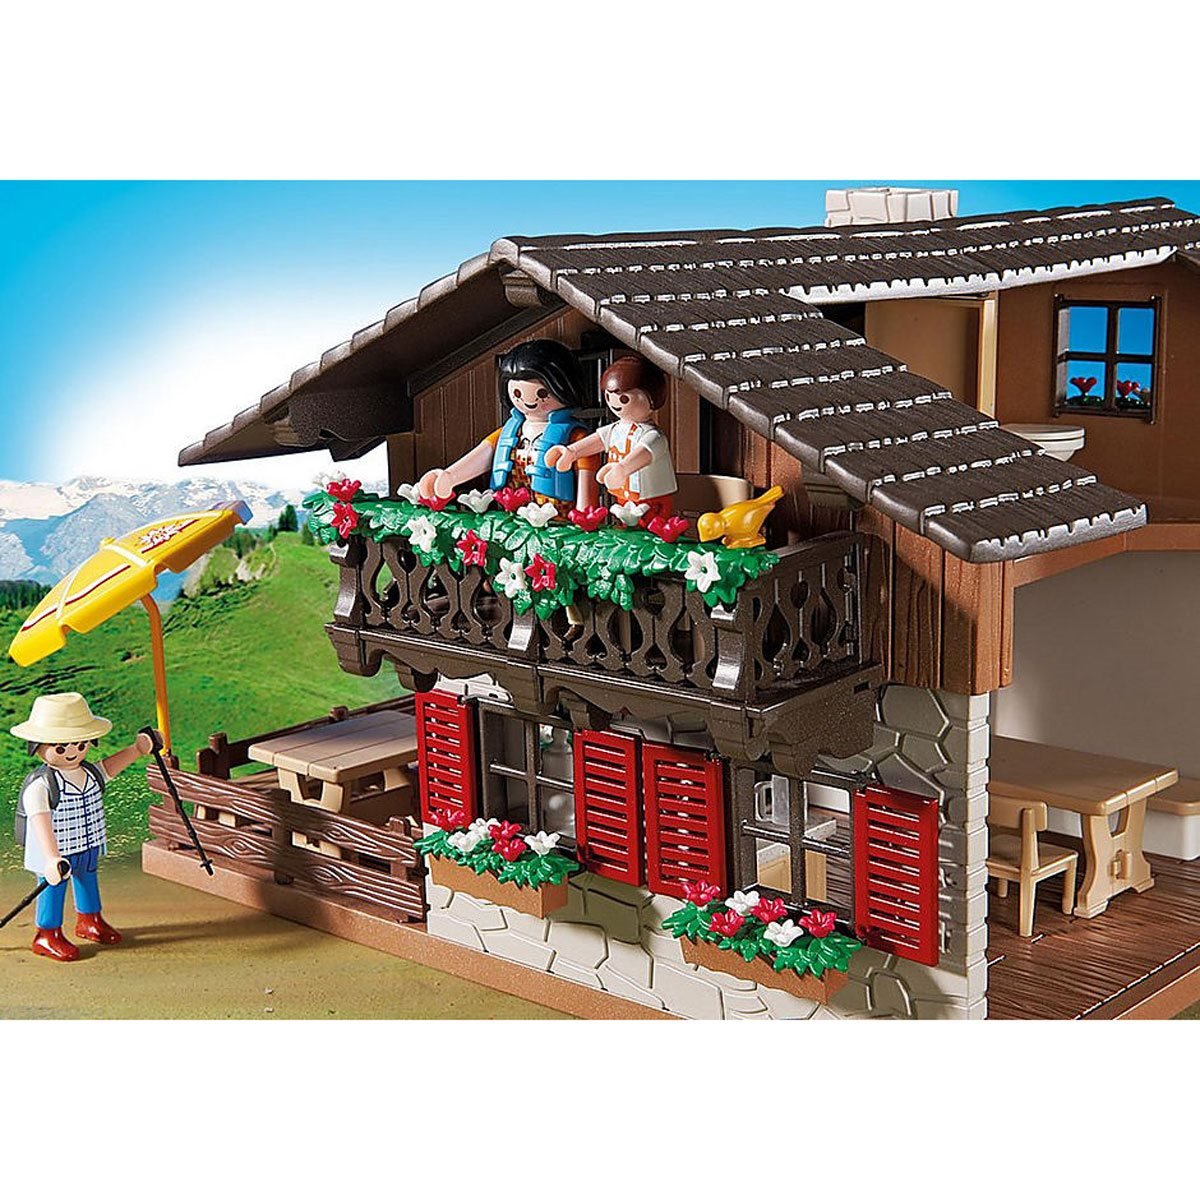 Playmobil 5422 Alpine Lodge Playset - Entertainment